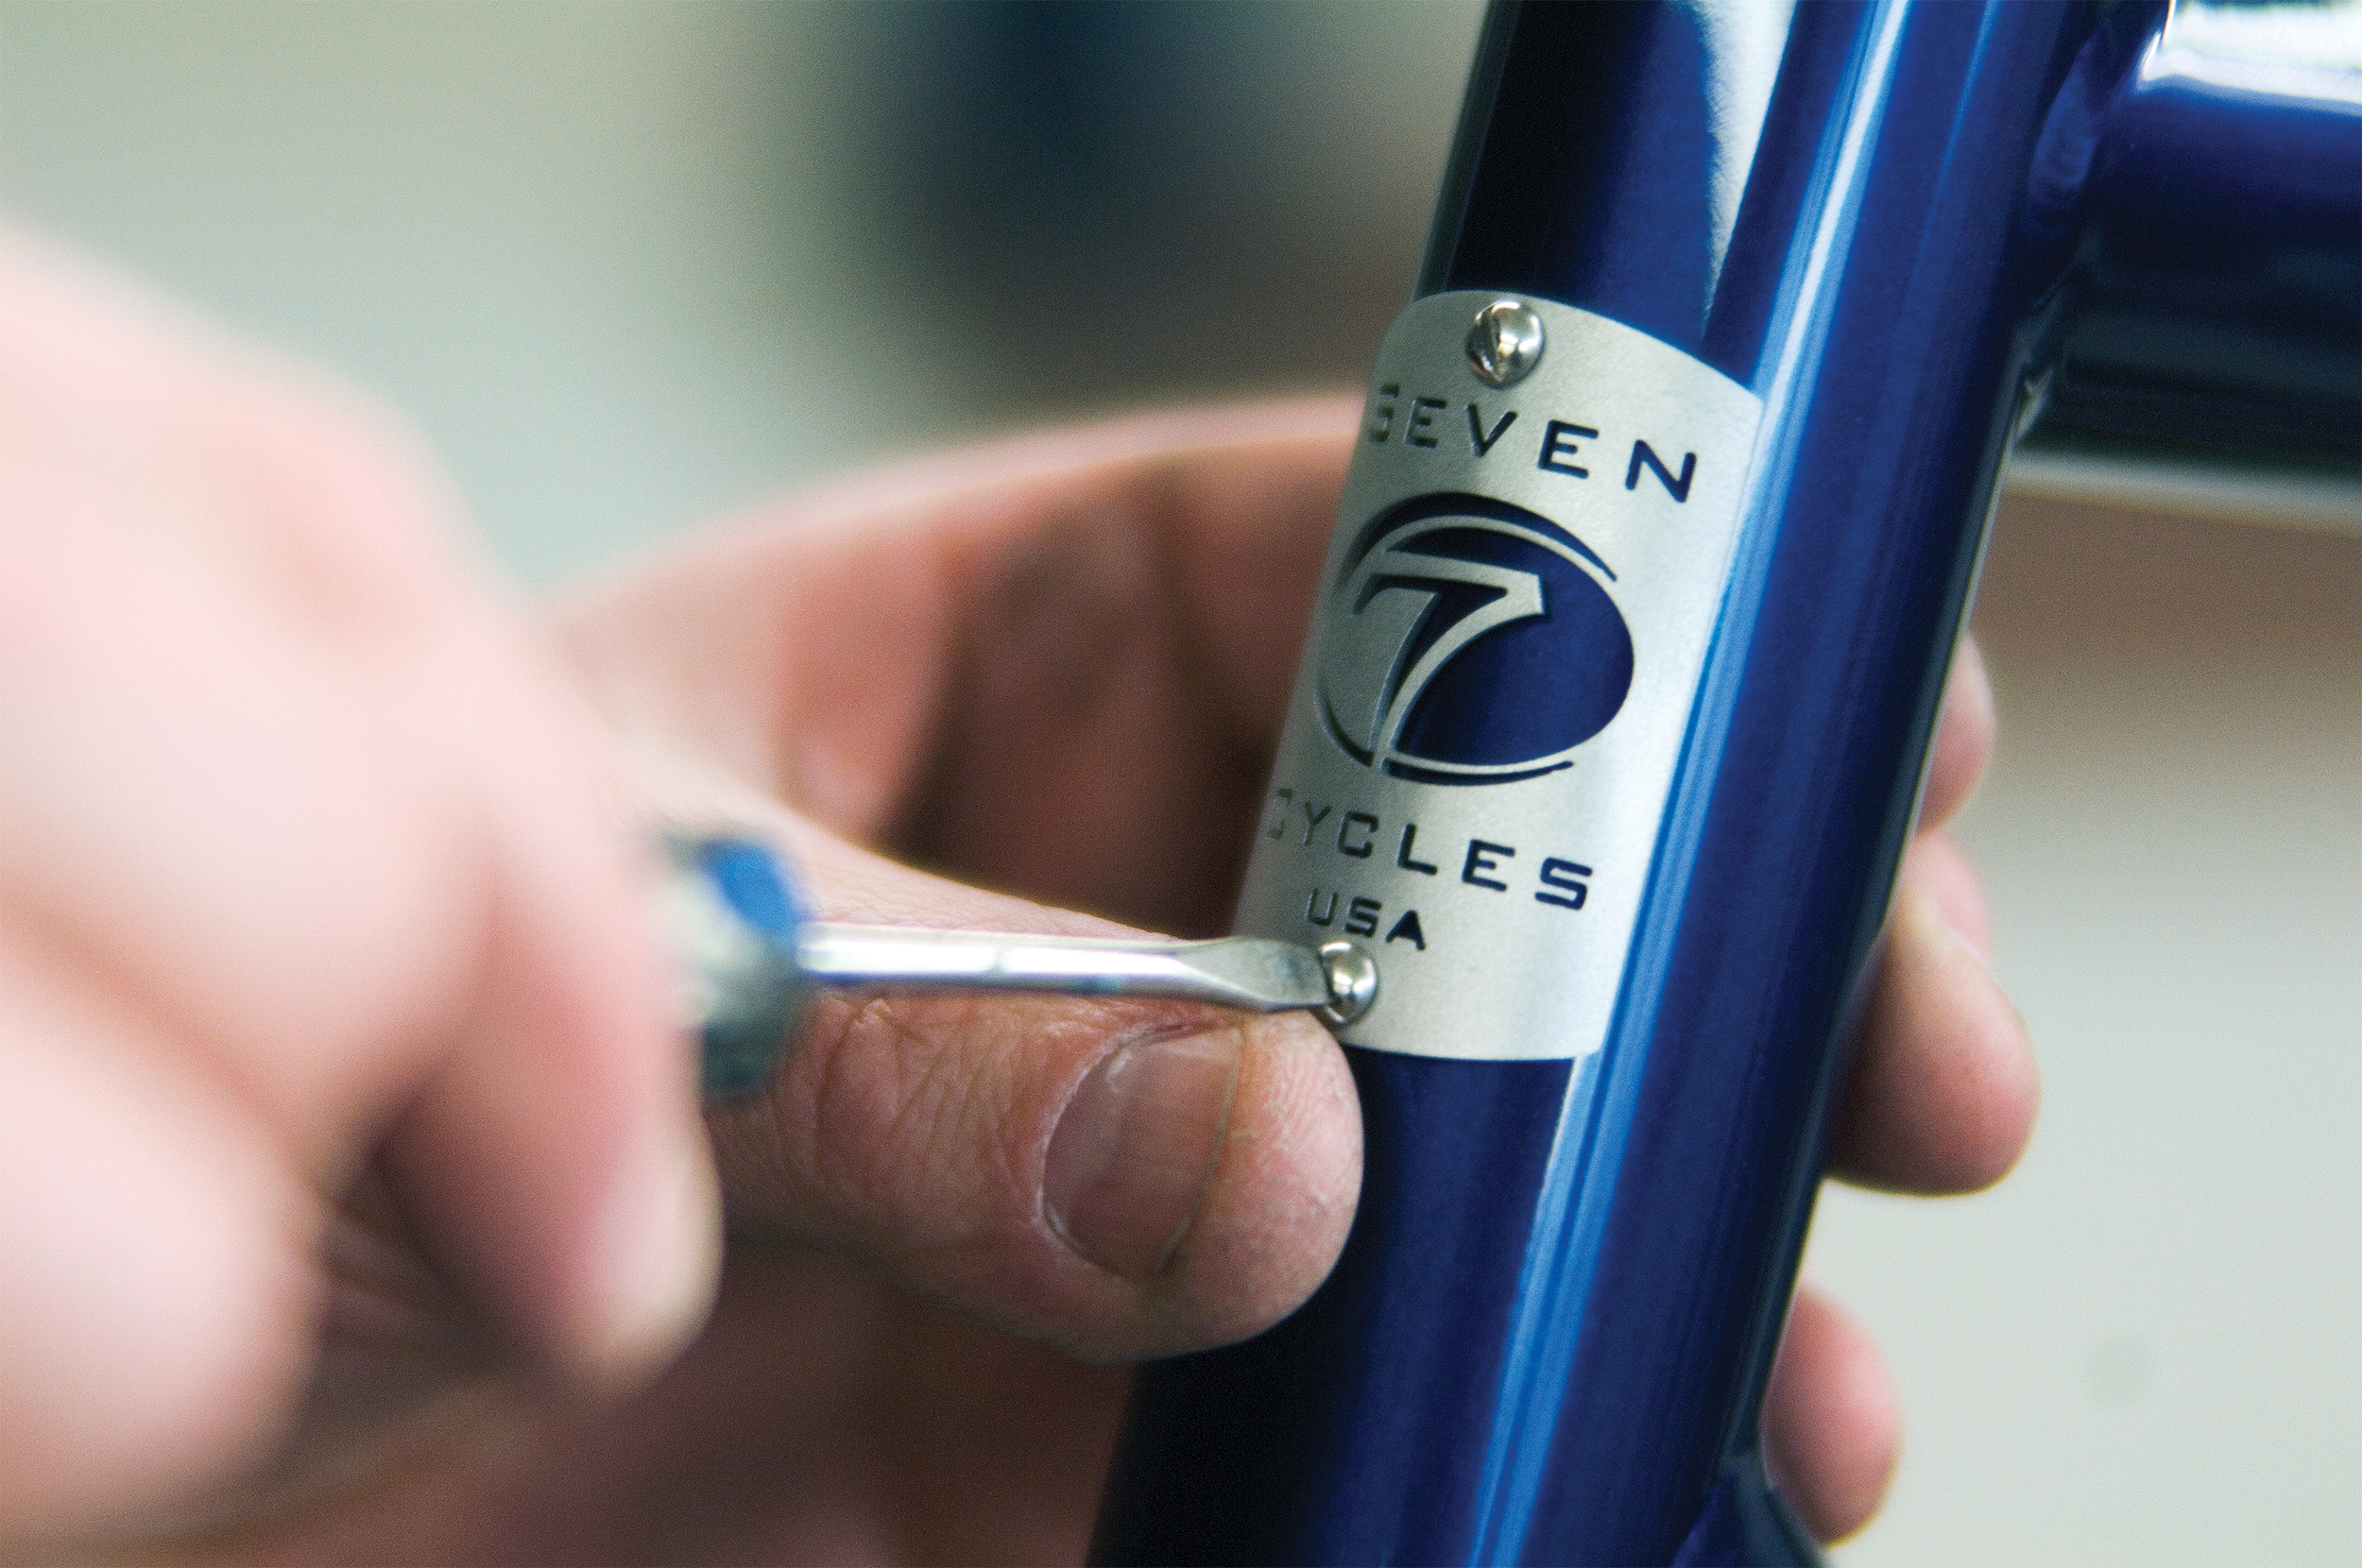   Seven Cycles • head tube badge  • designer/director: Michael Balint 